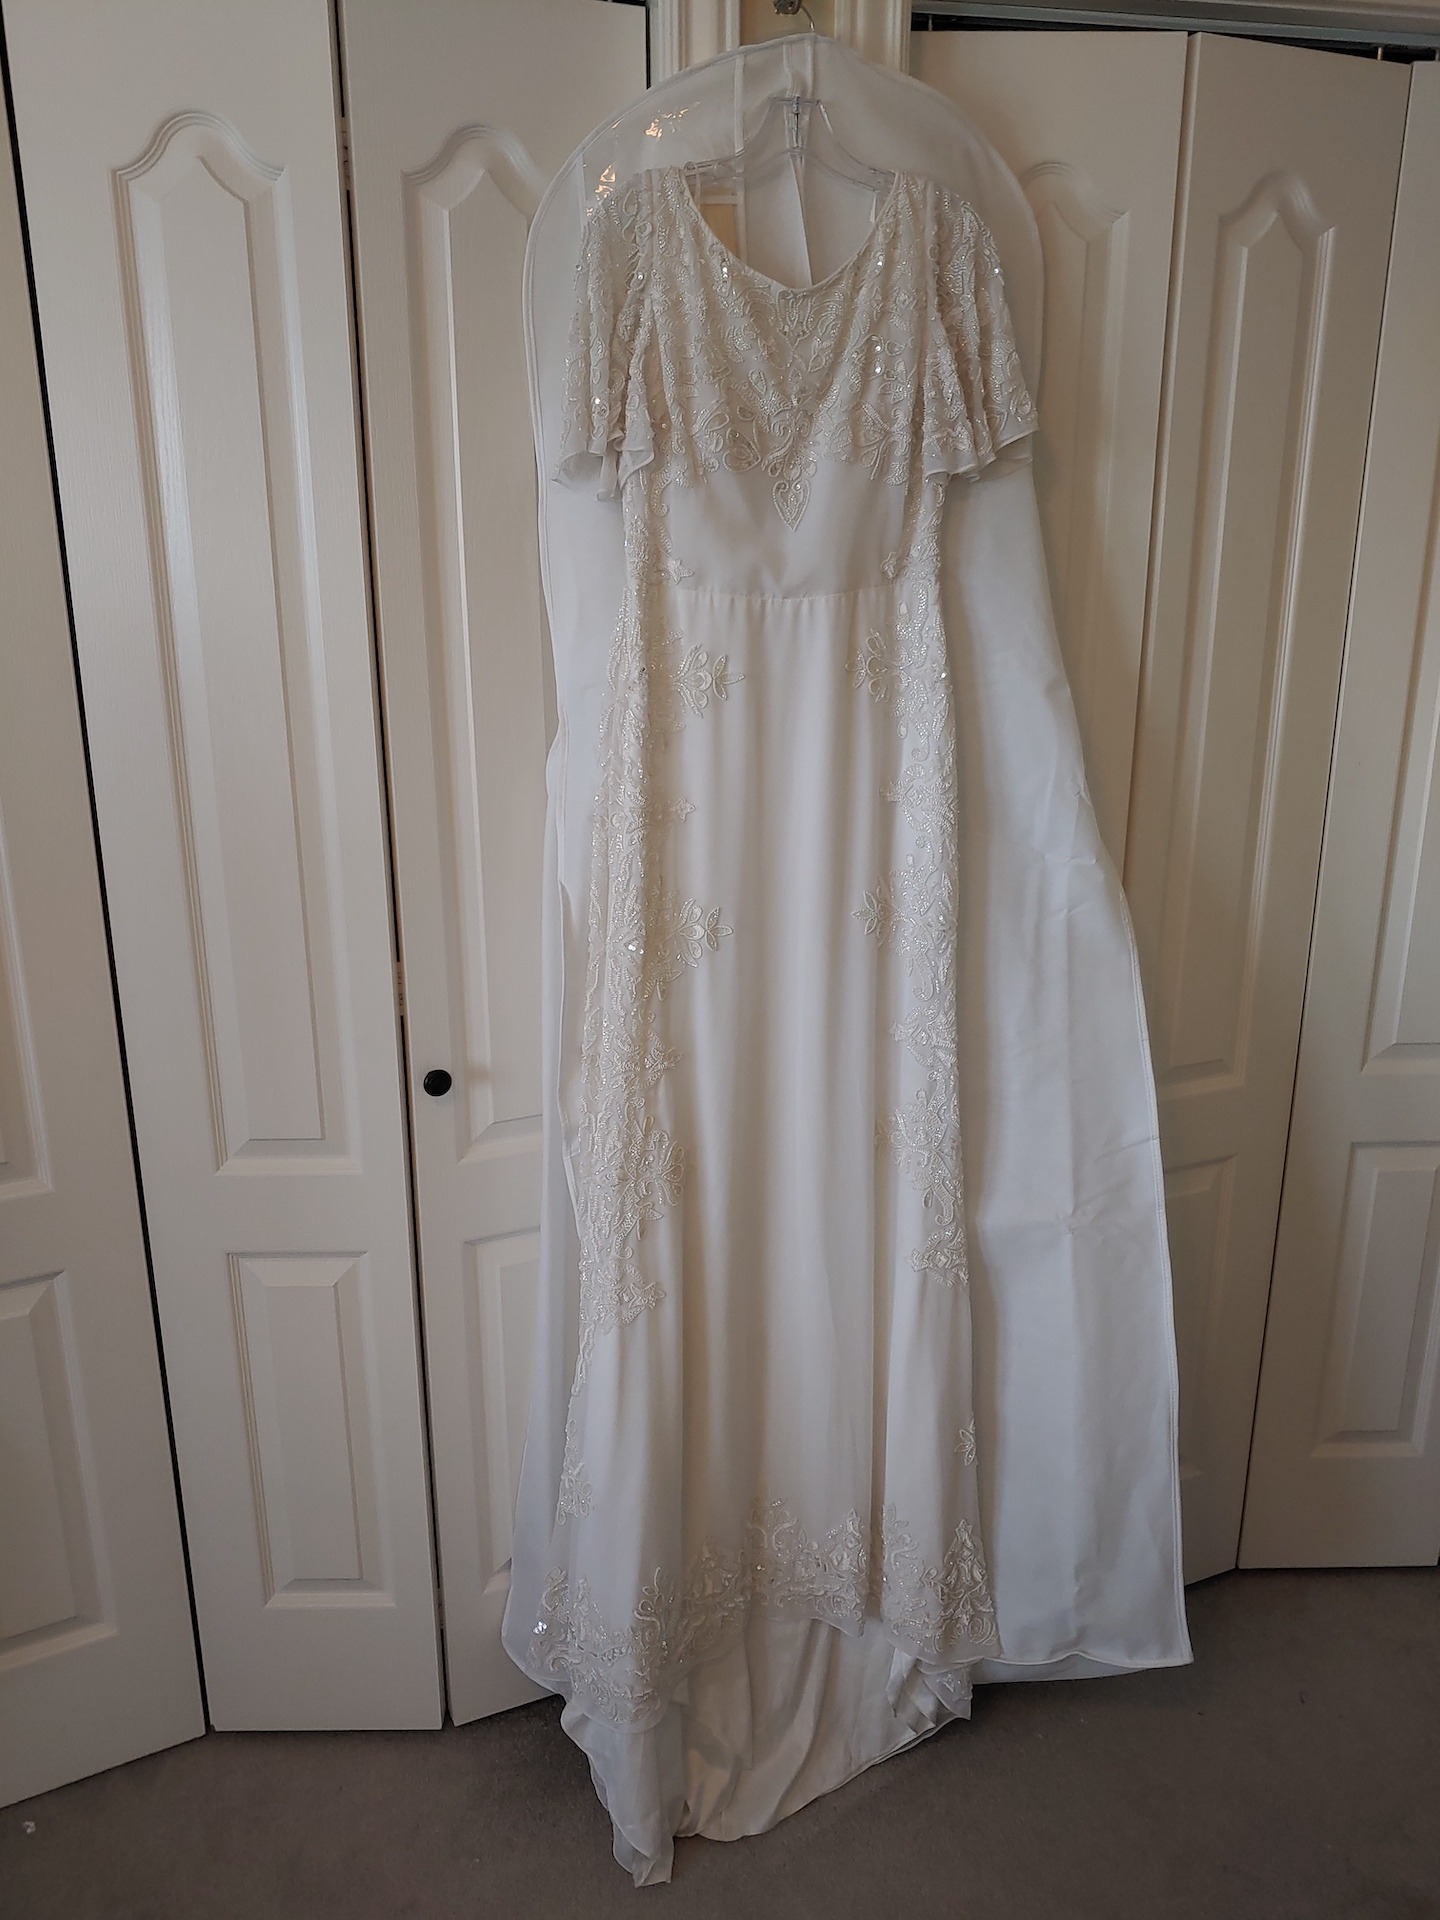 a wedding dress that needs hemming work done